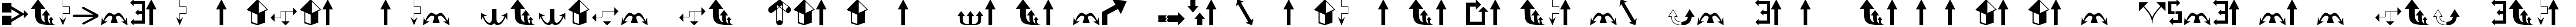 Пример написания шрифтом Arrows1 текста на испанском